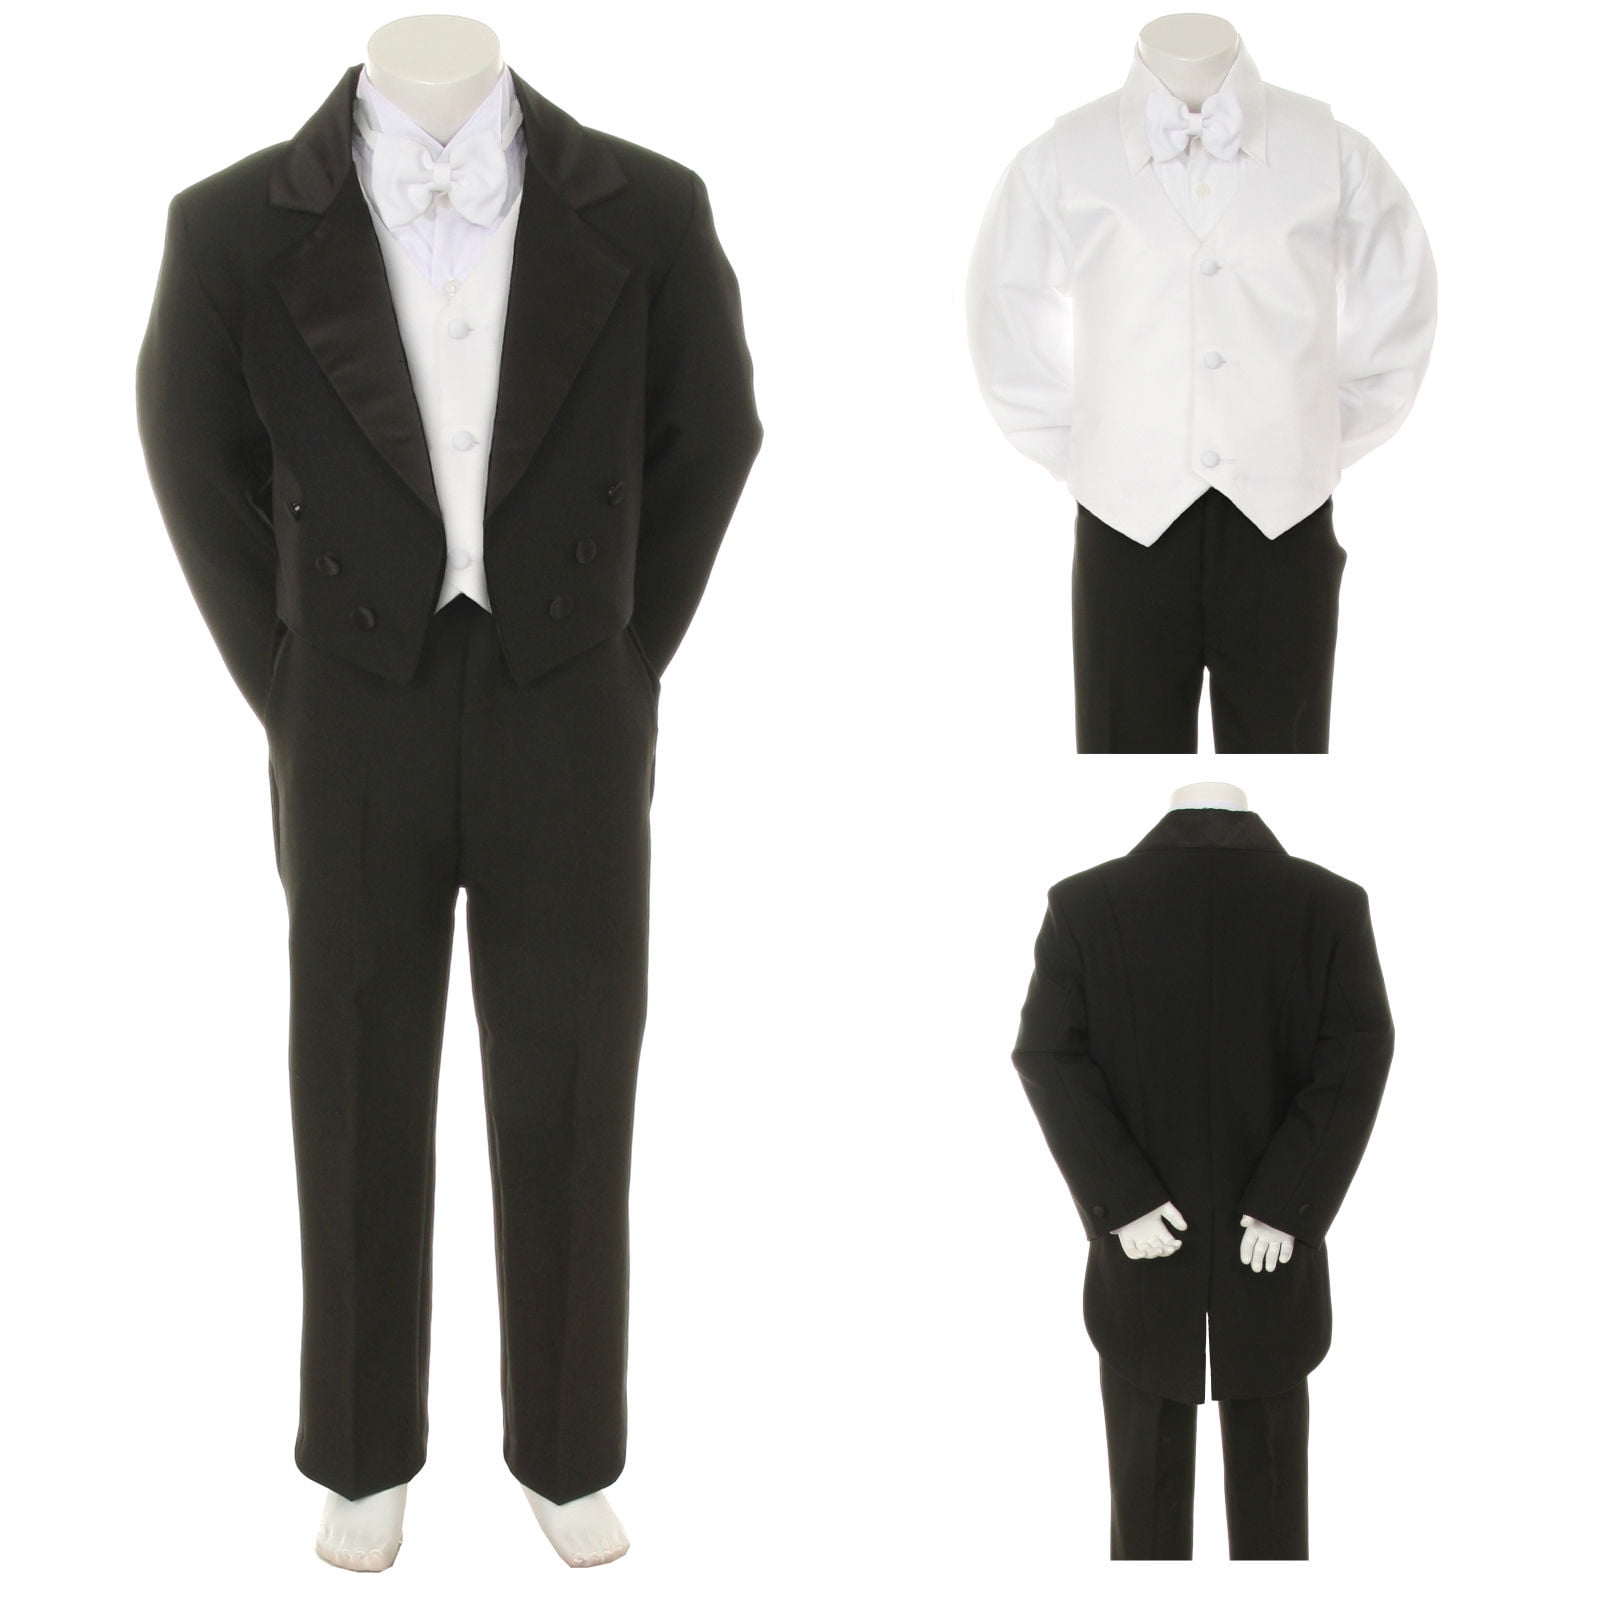 New Infant Toddler & Boy Wedding Graduation Formal Tuxedo Tail Suit Black S-20 